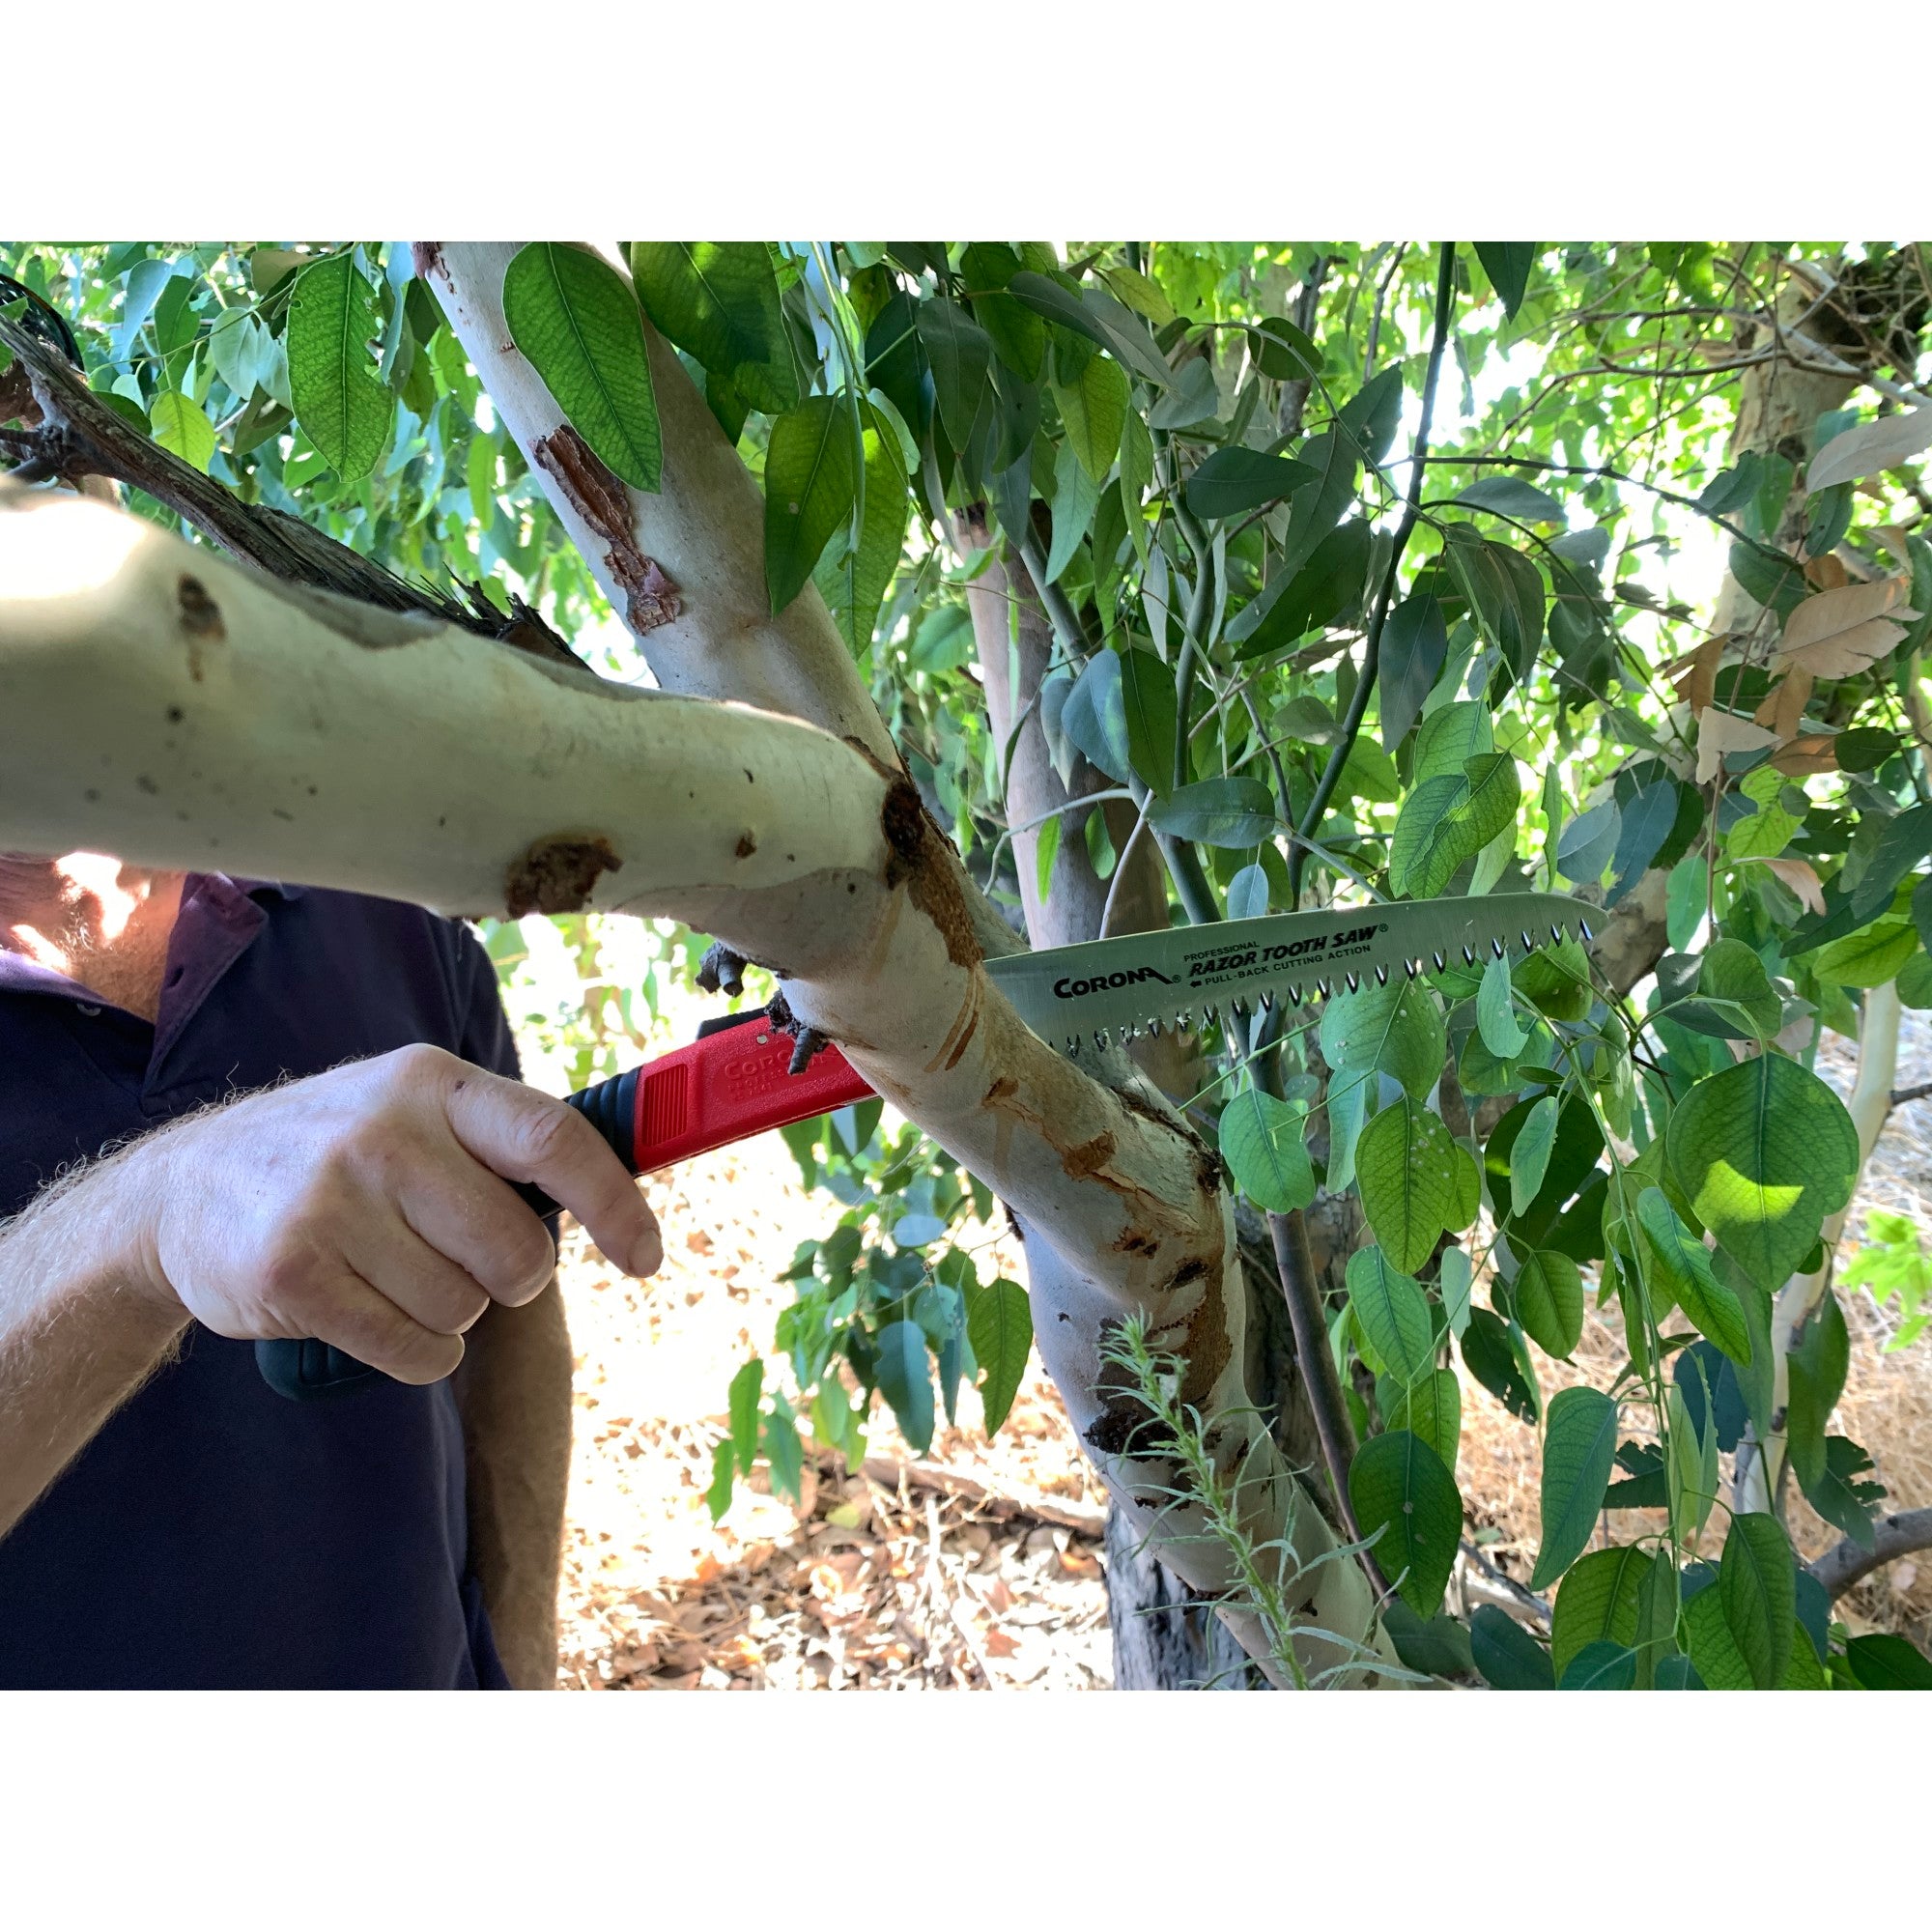 RazorTOOTH Saw™ Arborist Folding Pruning Saw, 7 in. Blade